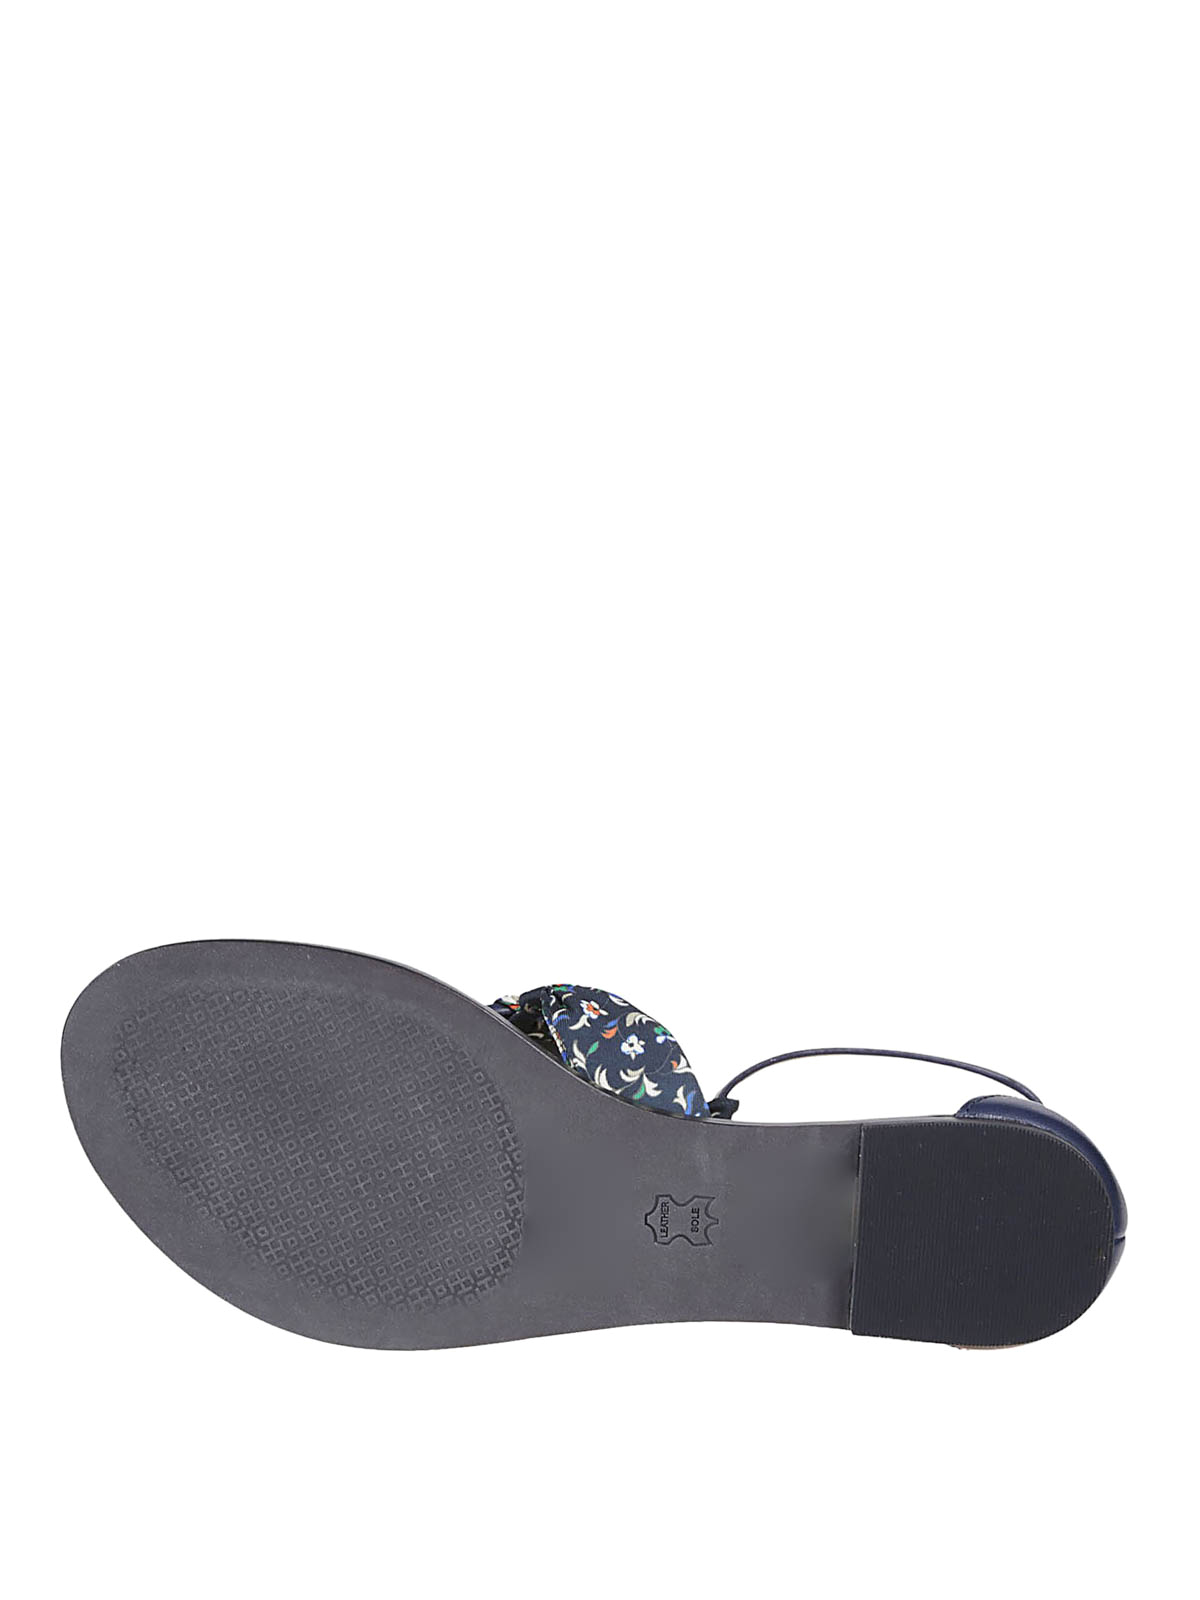 Sandals Tory Burch - Miller Scarf blue sandals - 53723400 